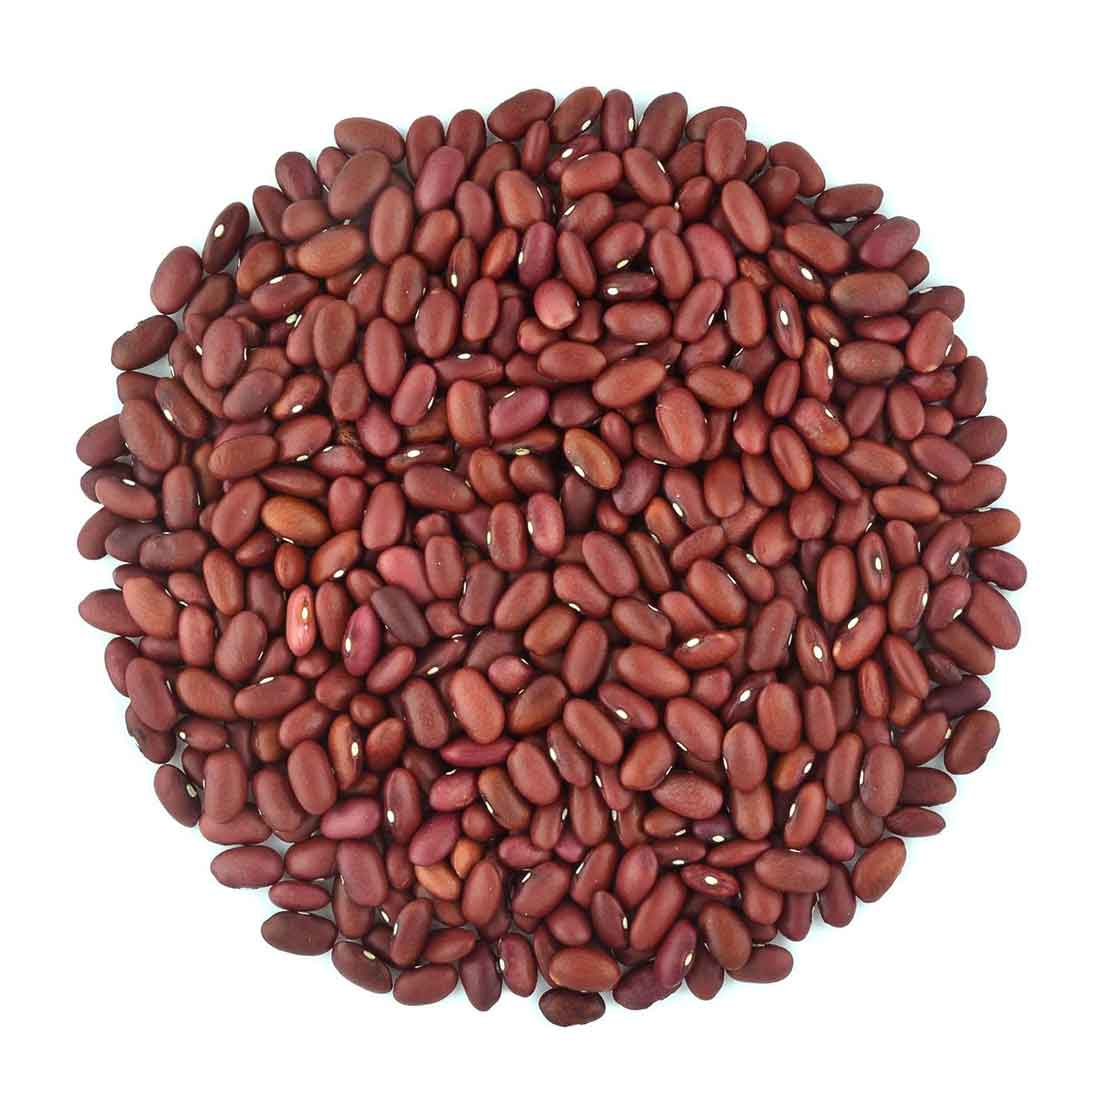 Rajma | Kidney Beans